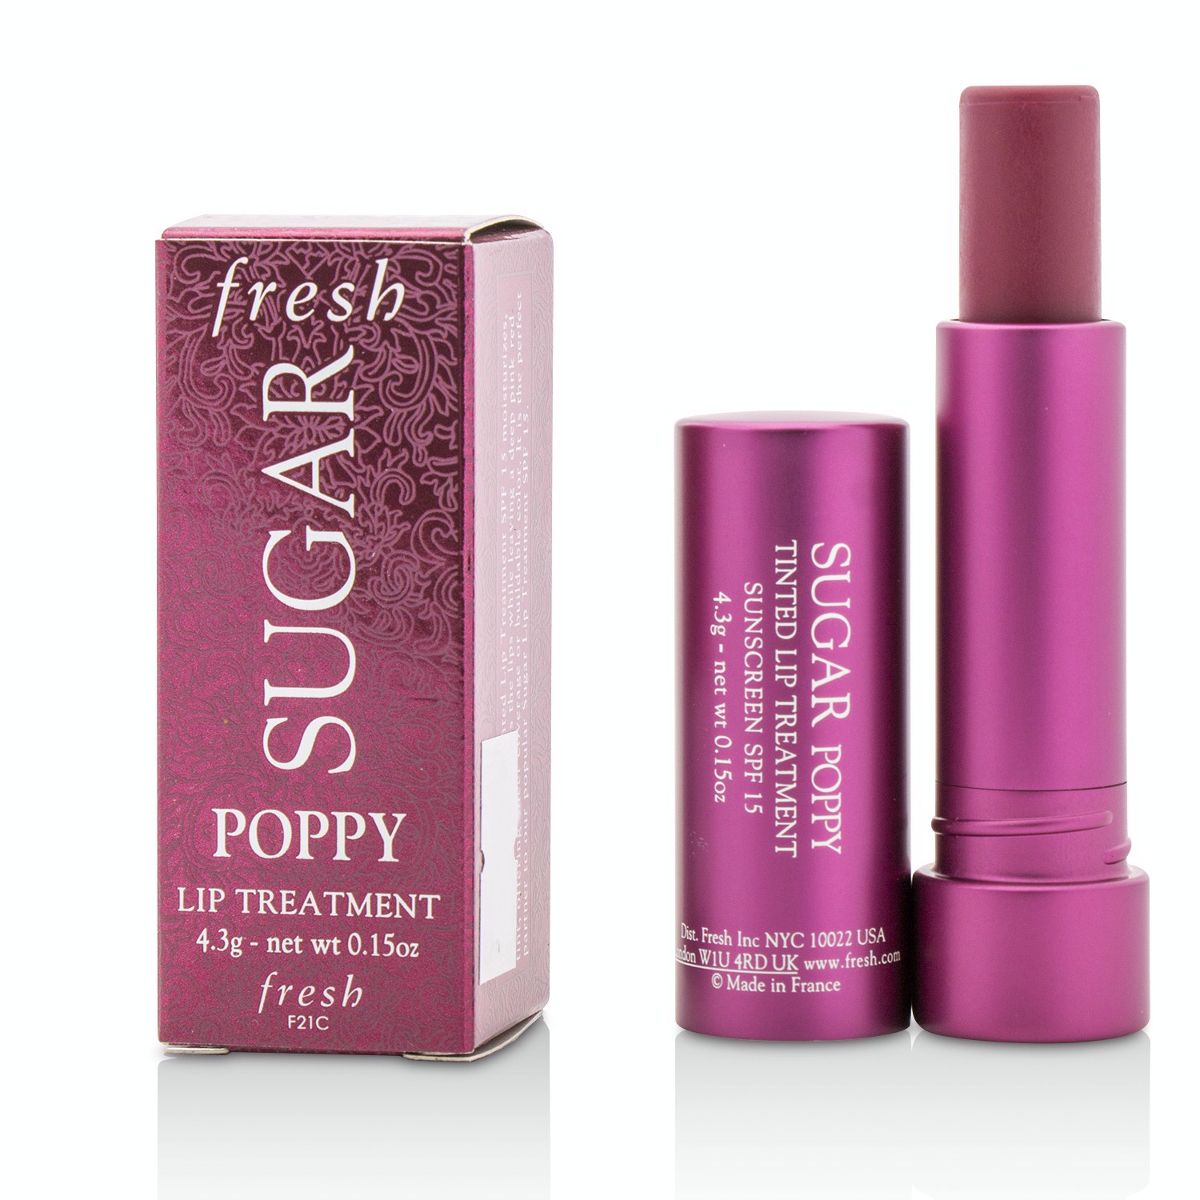 Sugar Lip Treatment SPF 15 - Poppy Fresh Image